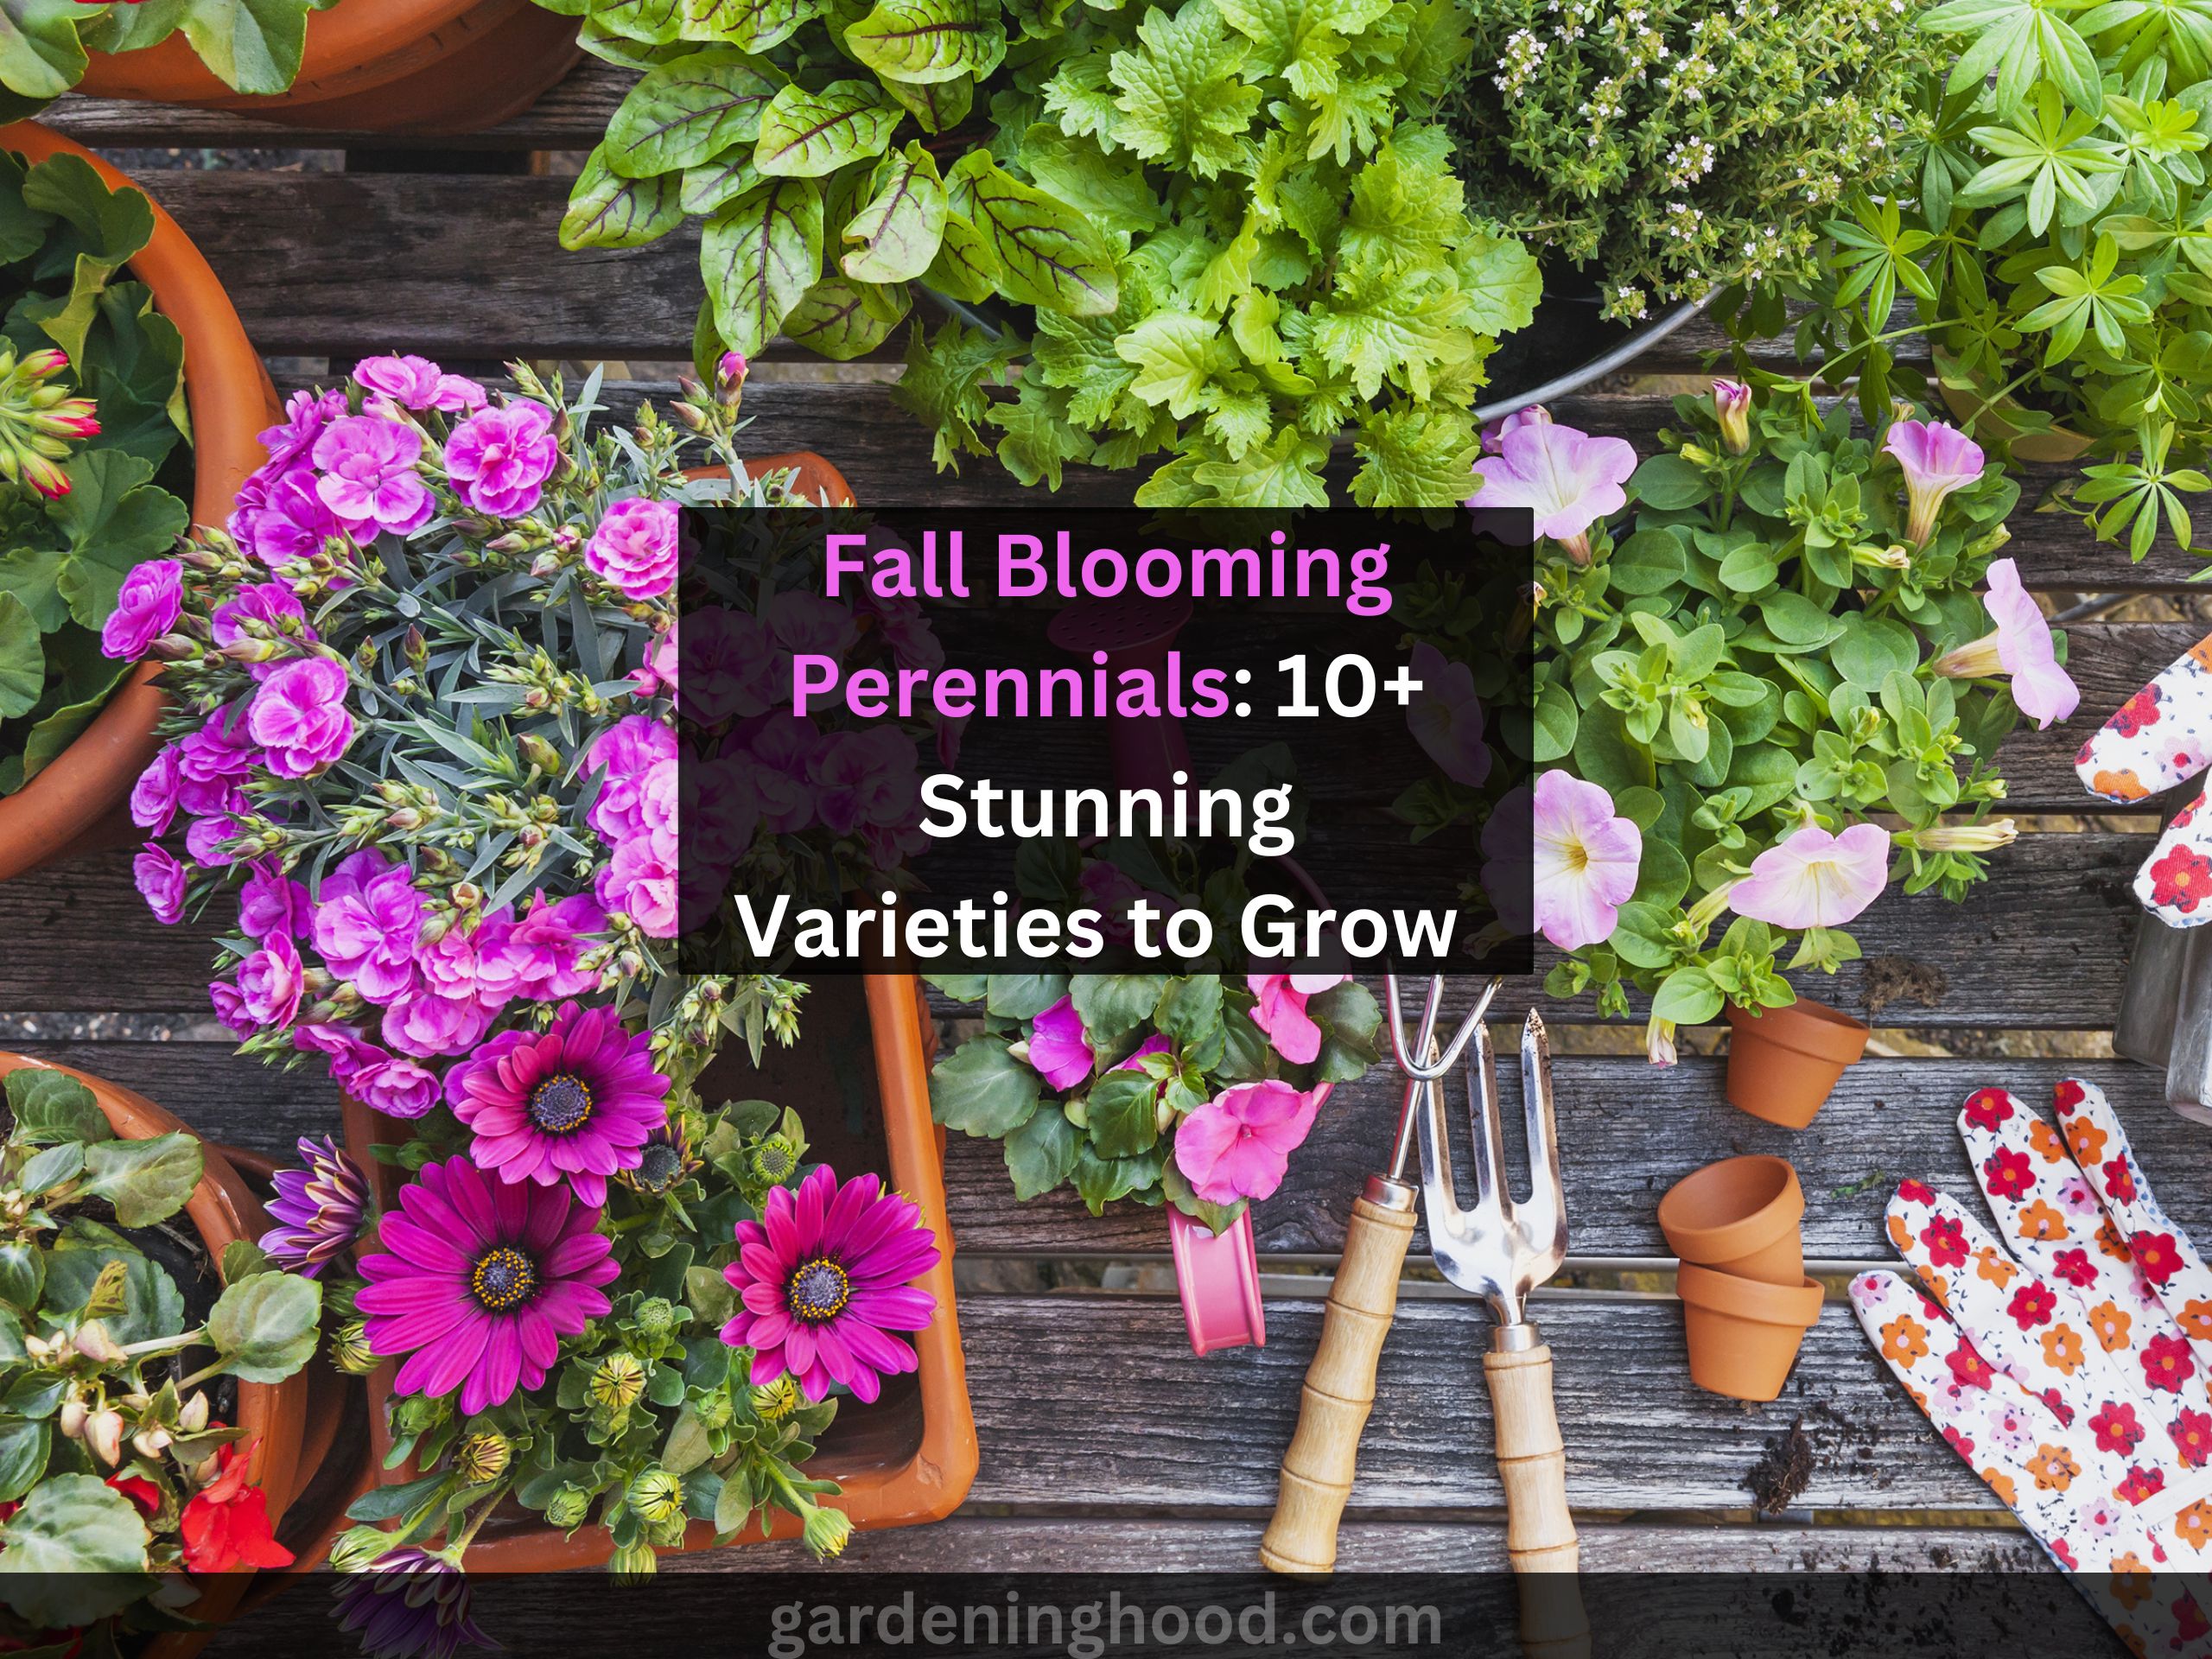 Fall Blooming Perennials: 10+ Stunning Varieties to Grow